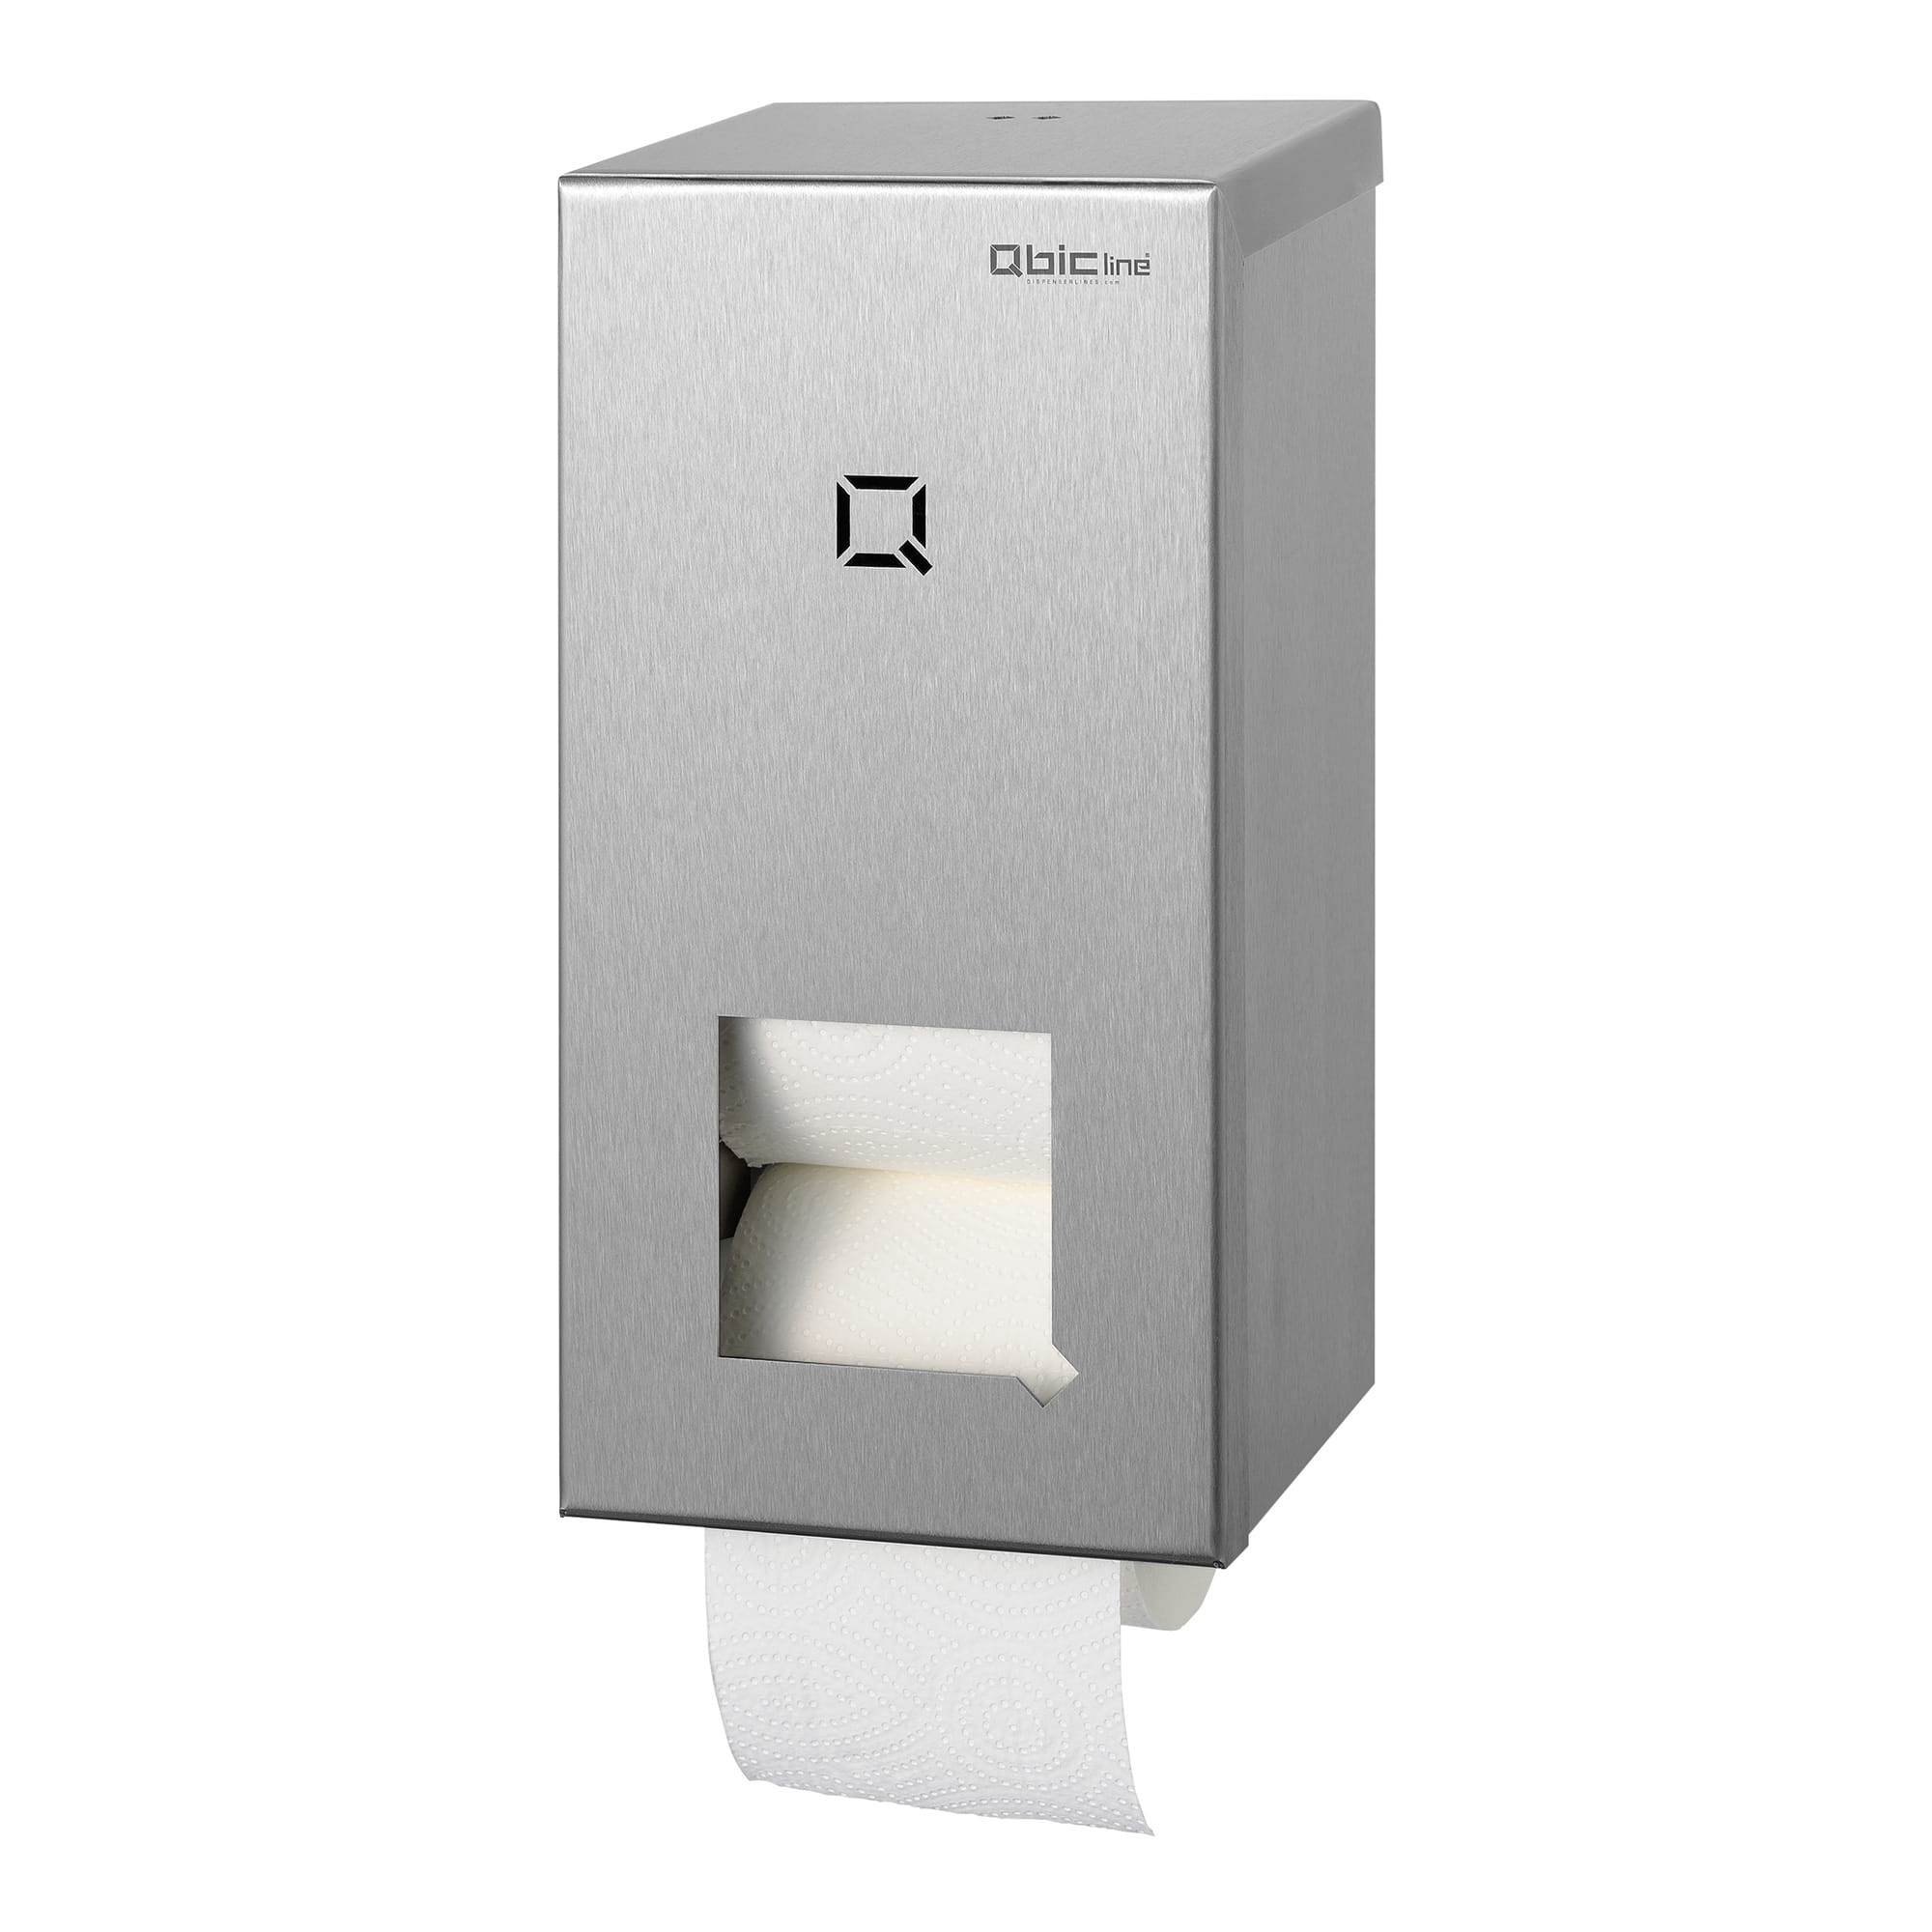 Qbic-line Toilettenpapierspender 2 Rollen QTR2 SSL Edelstahl matt 6820_1